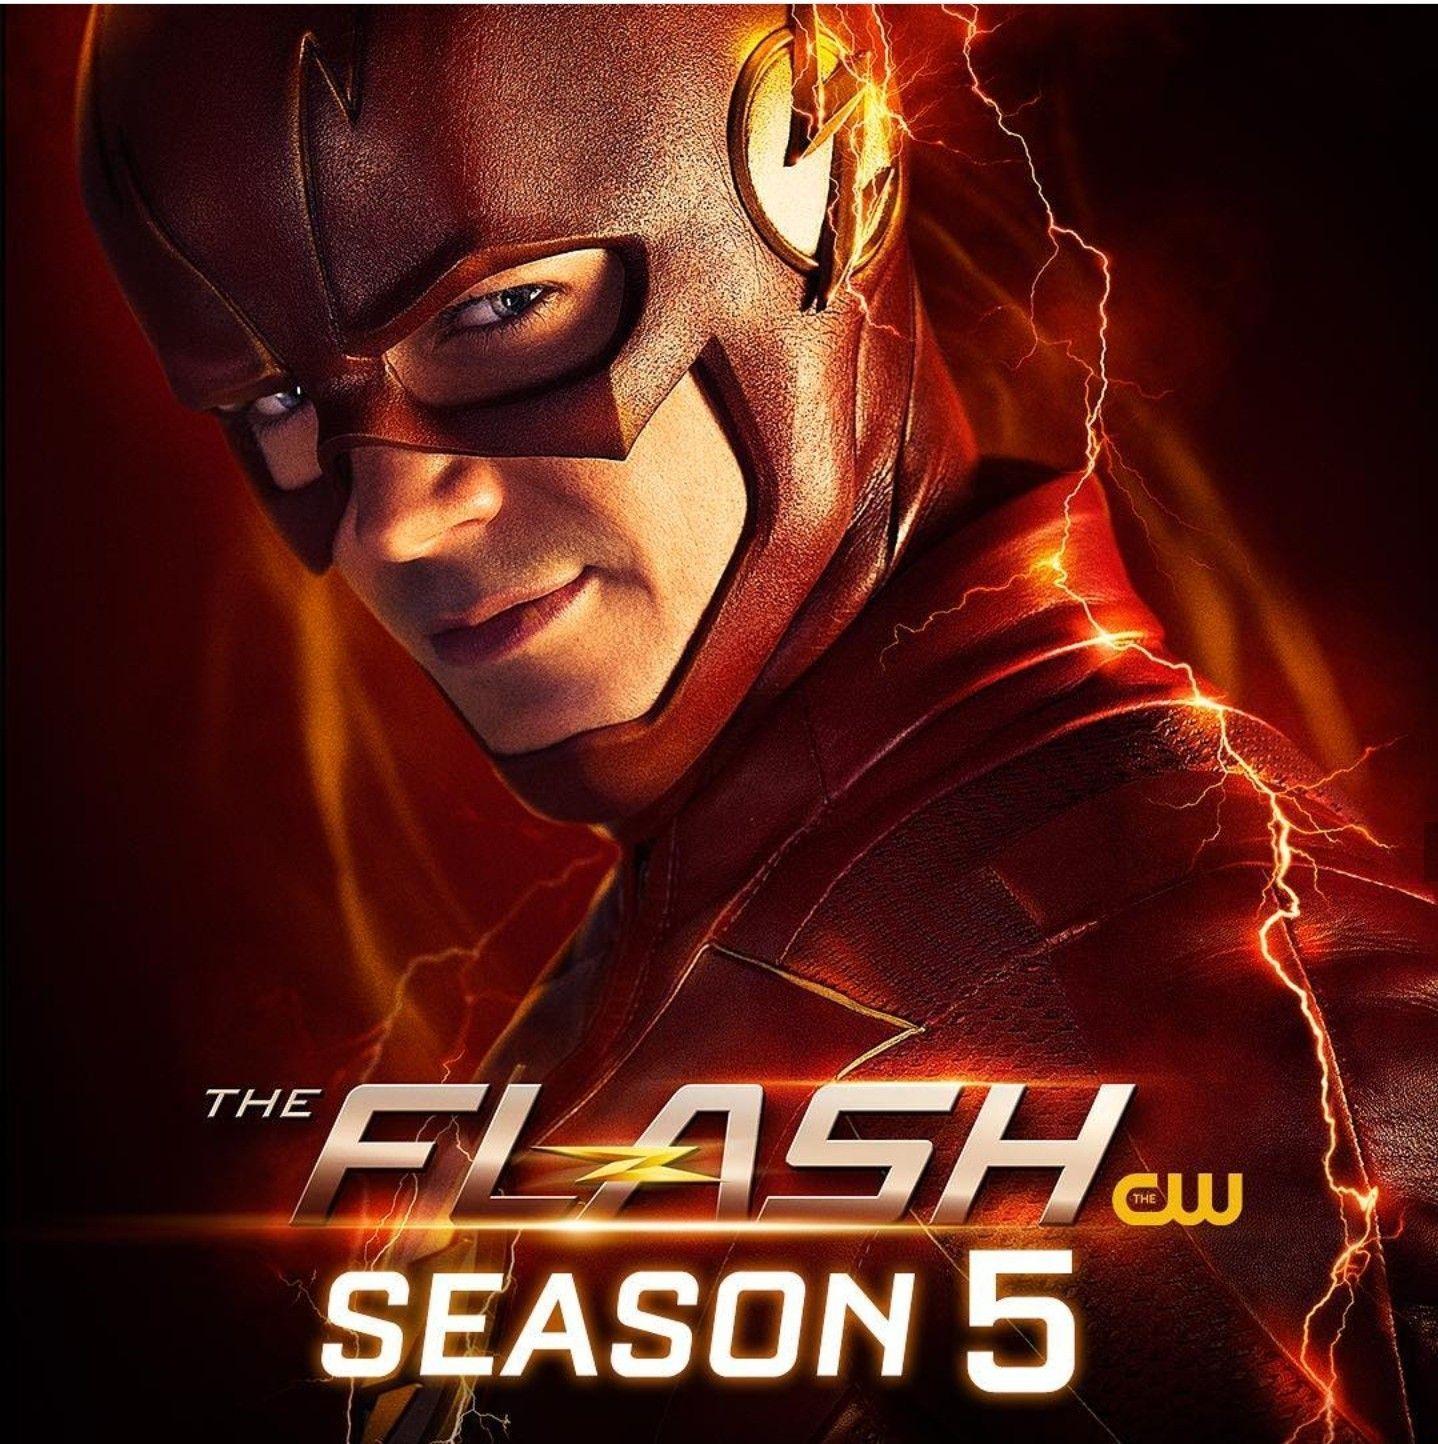 The Flash season 5 coming this fall. The Flash. Grant